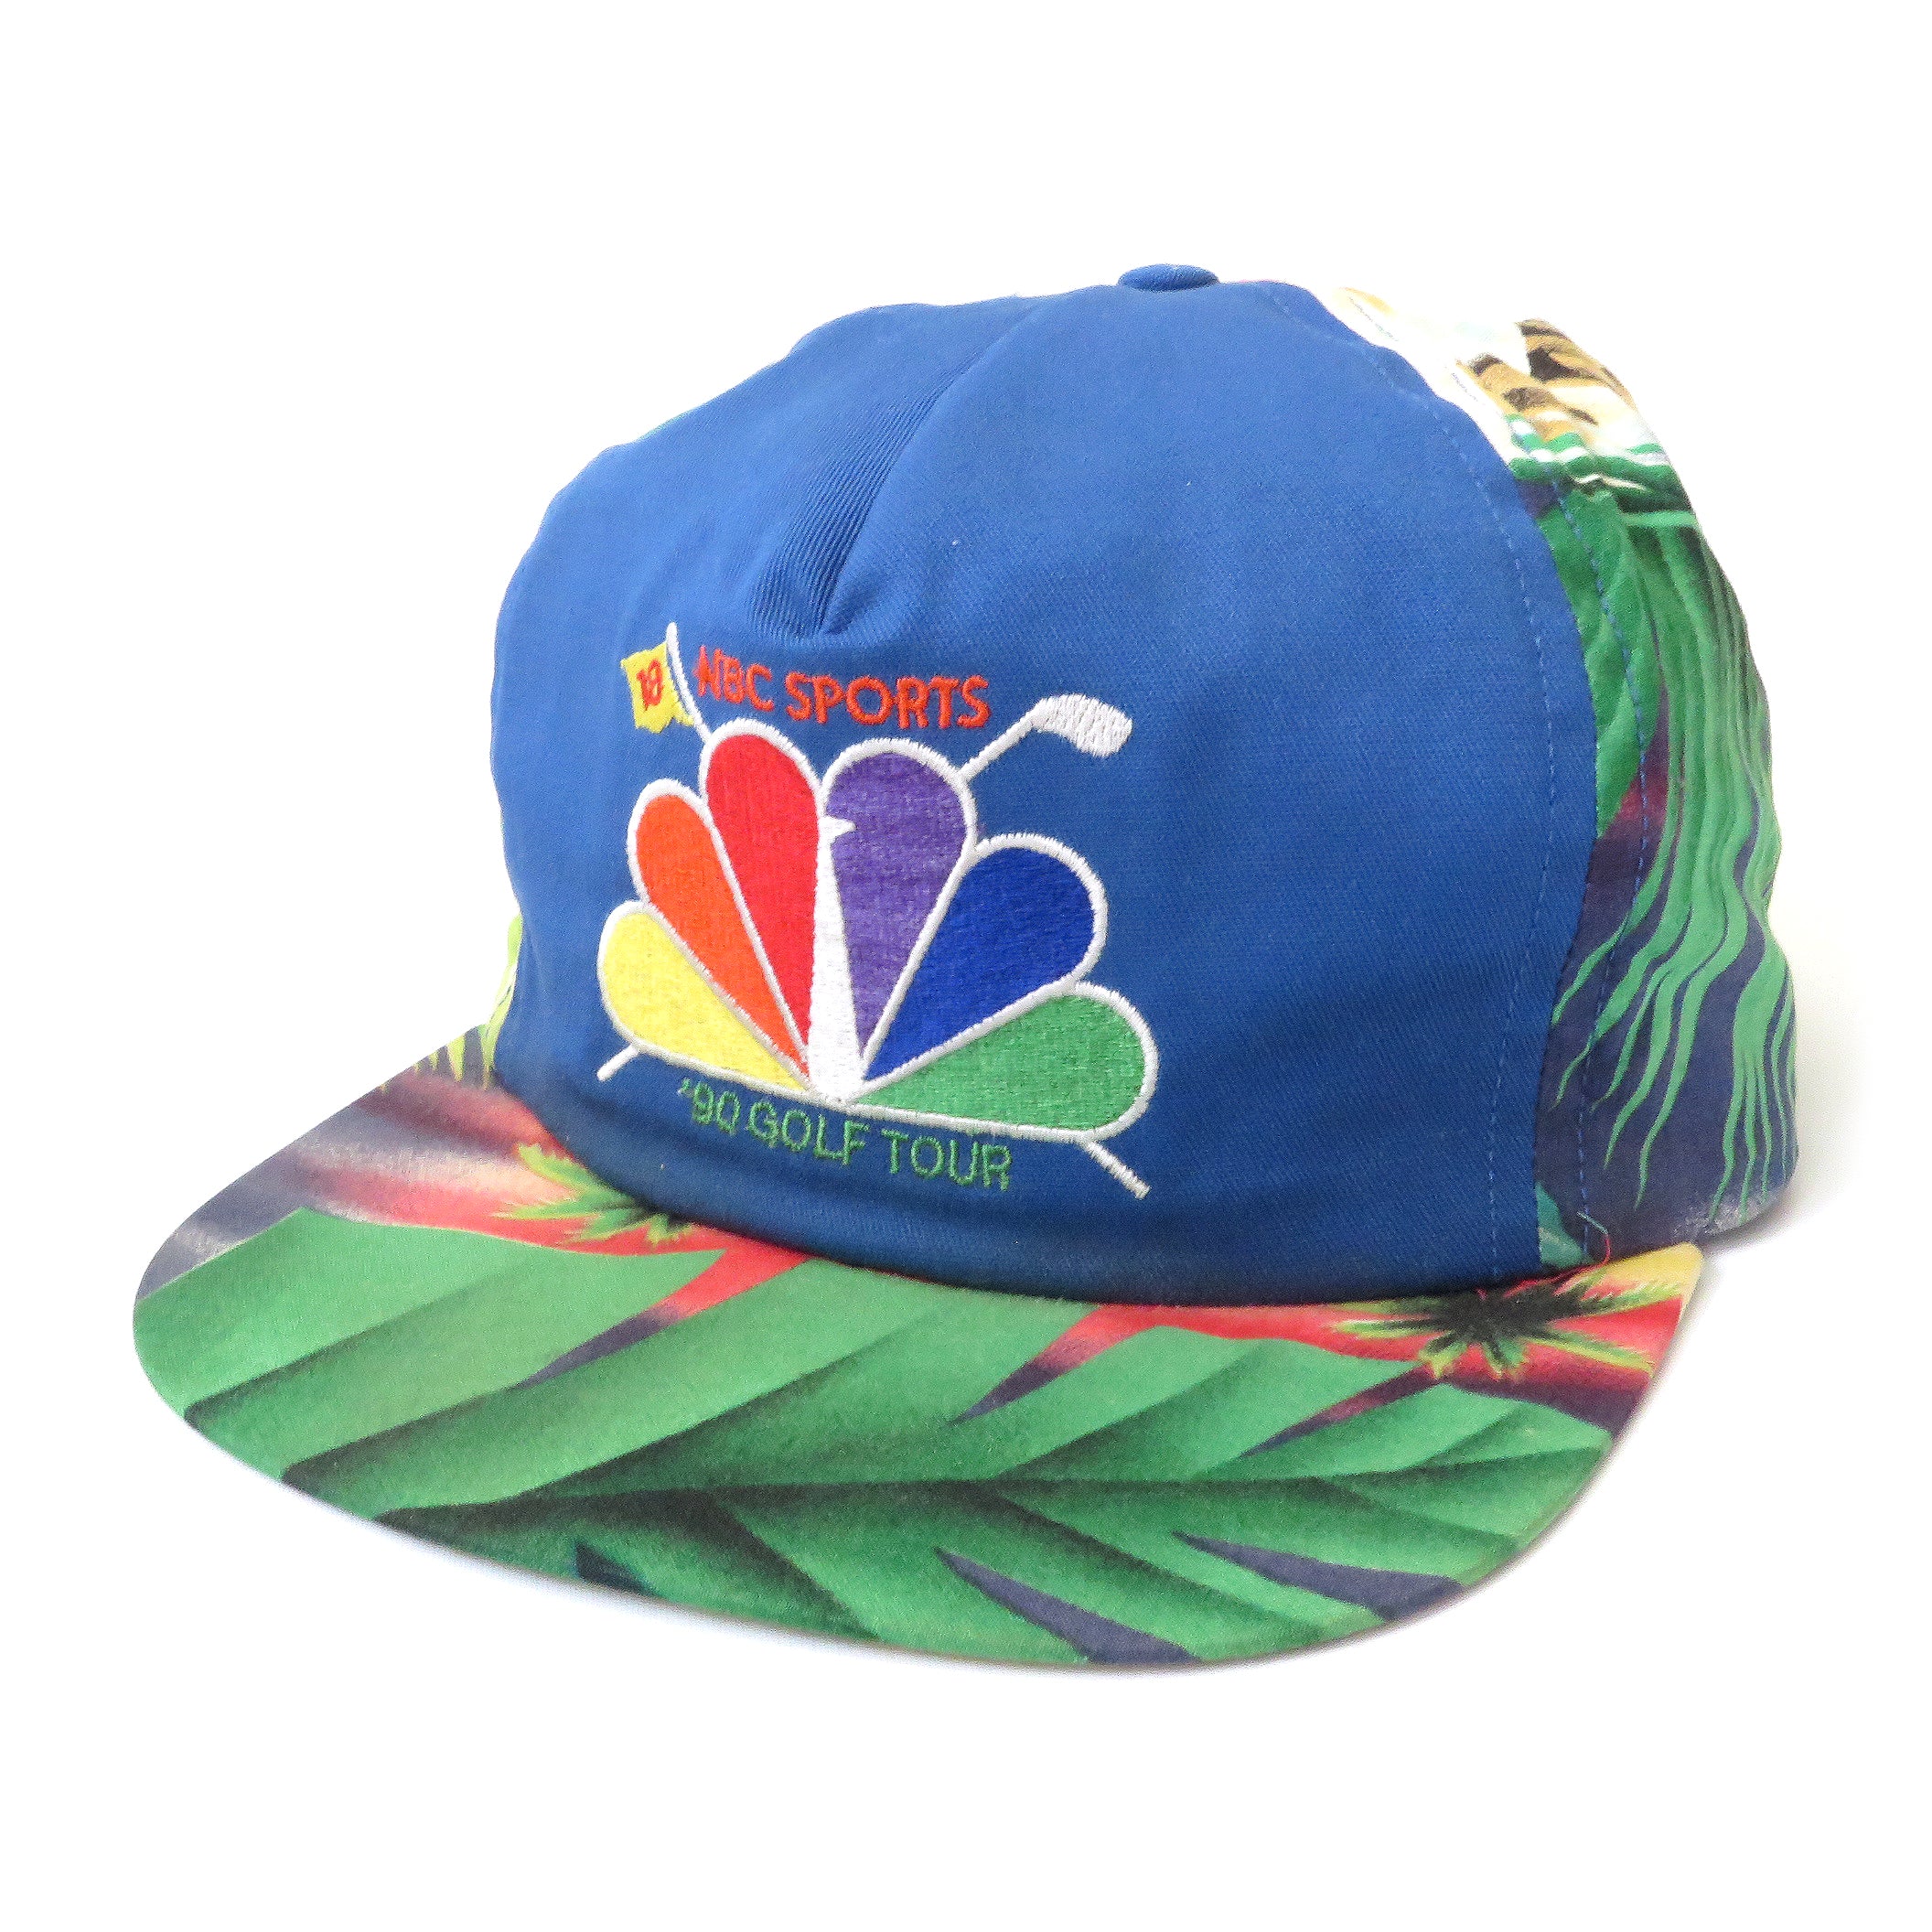 Vintage 1990 NBC Sports Golf Tour Tropical Strapback Hat